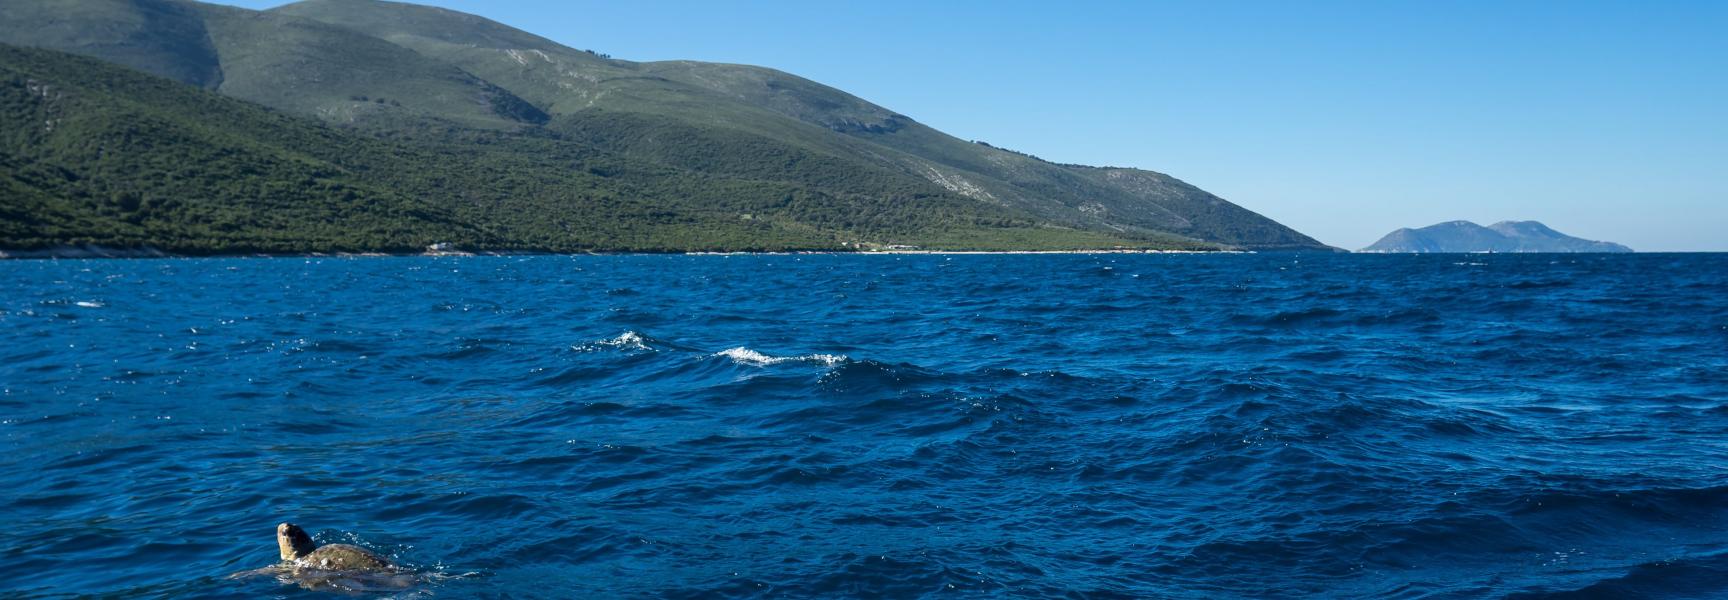 Turtle swimming in the waters of Karaburun Sazan Peninsula, the first and only national marine park of Albania